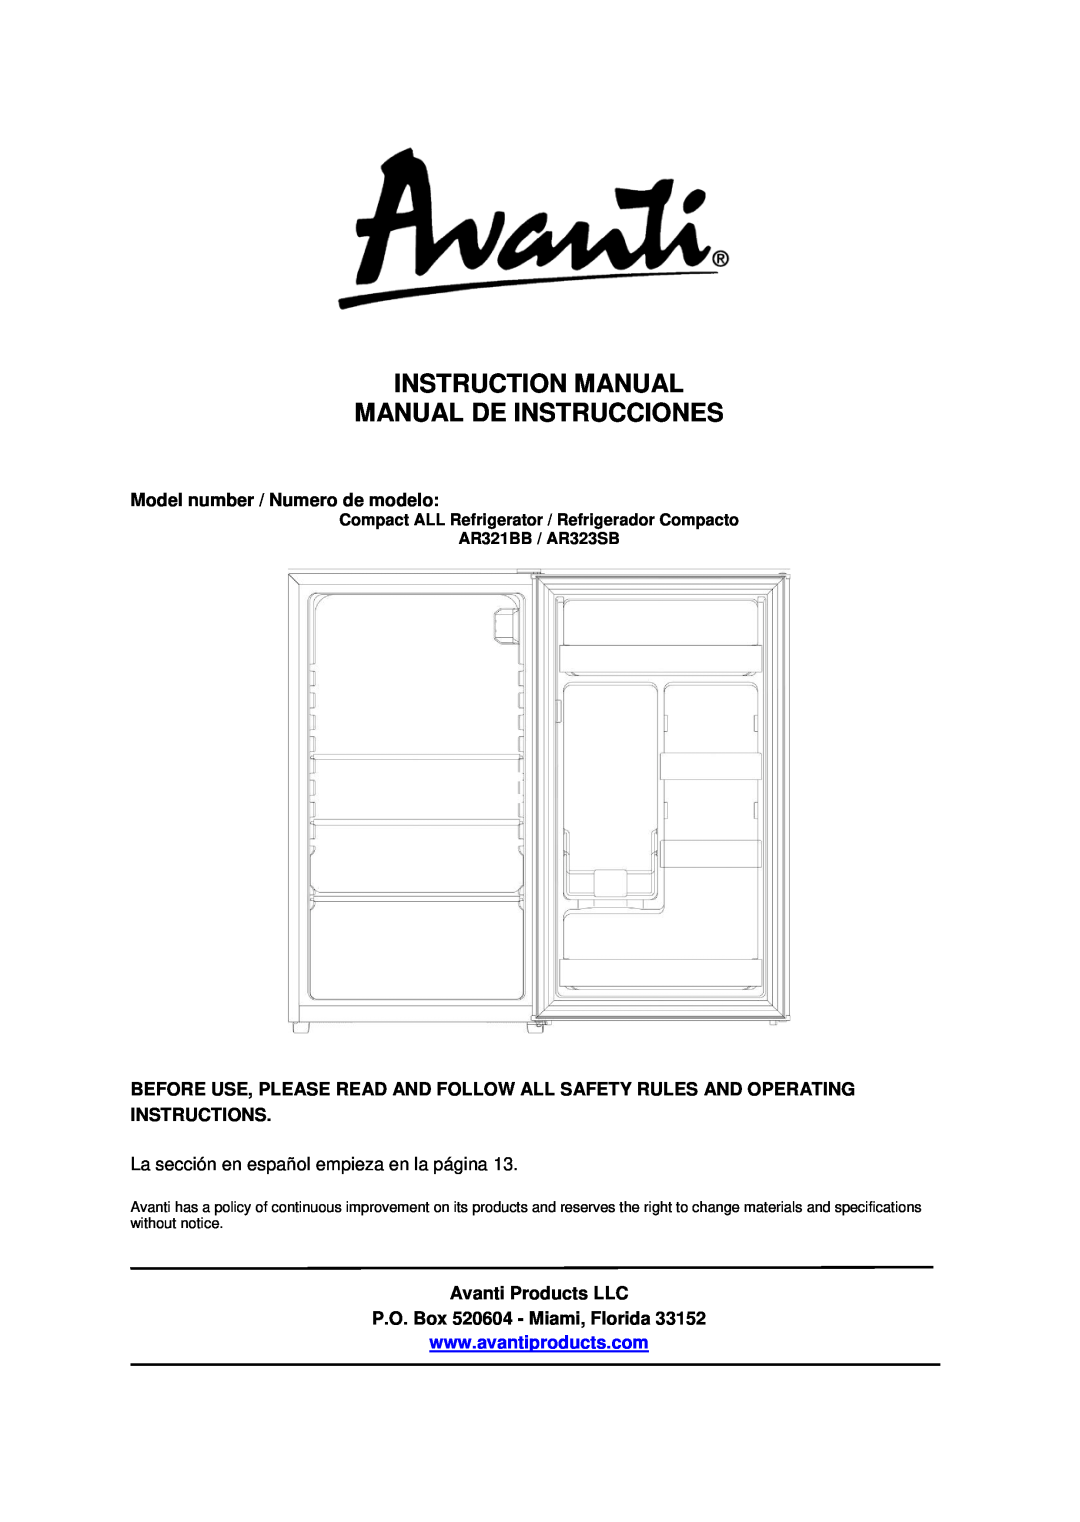 Avanti AR323SB instruction manual Model number / Numero de modelo, Avanti Products LLC, P.O. Box 520604 - Miami, Florida 